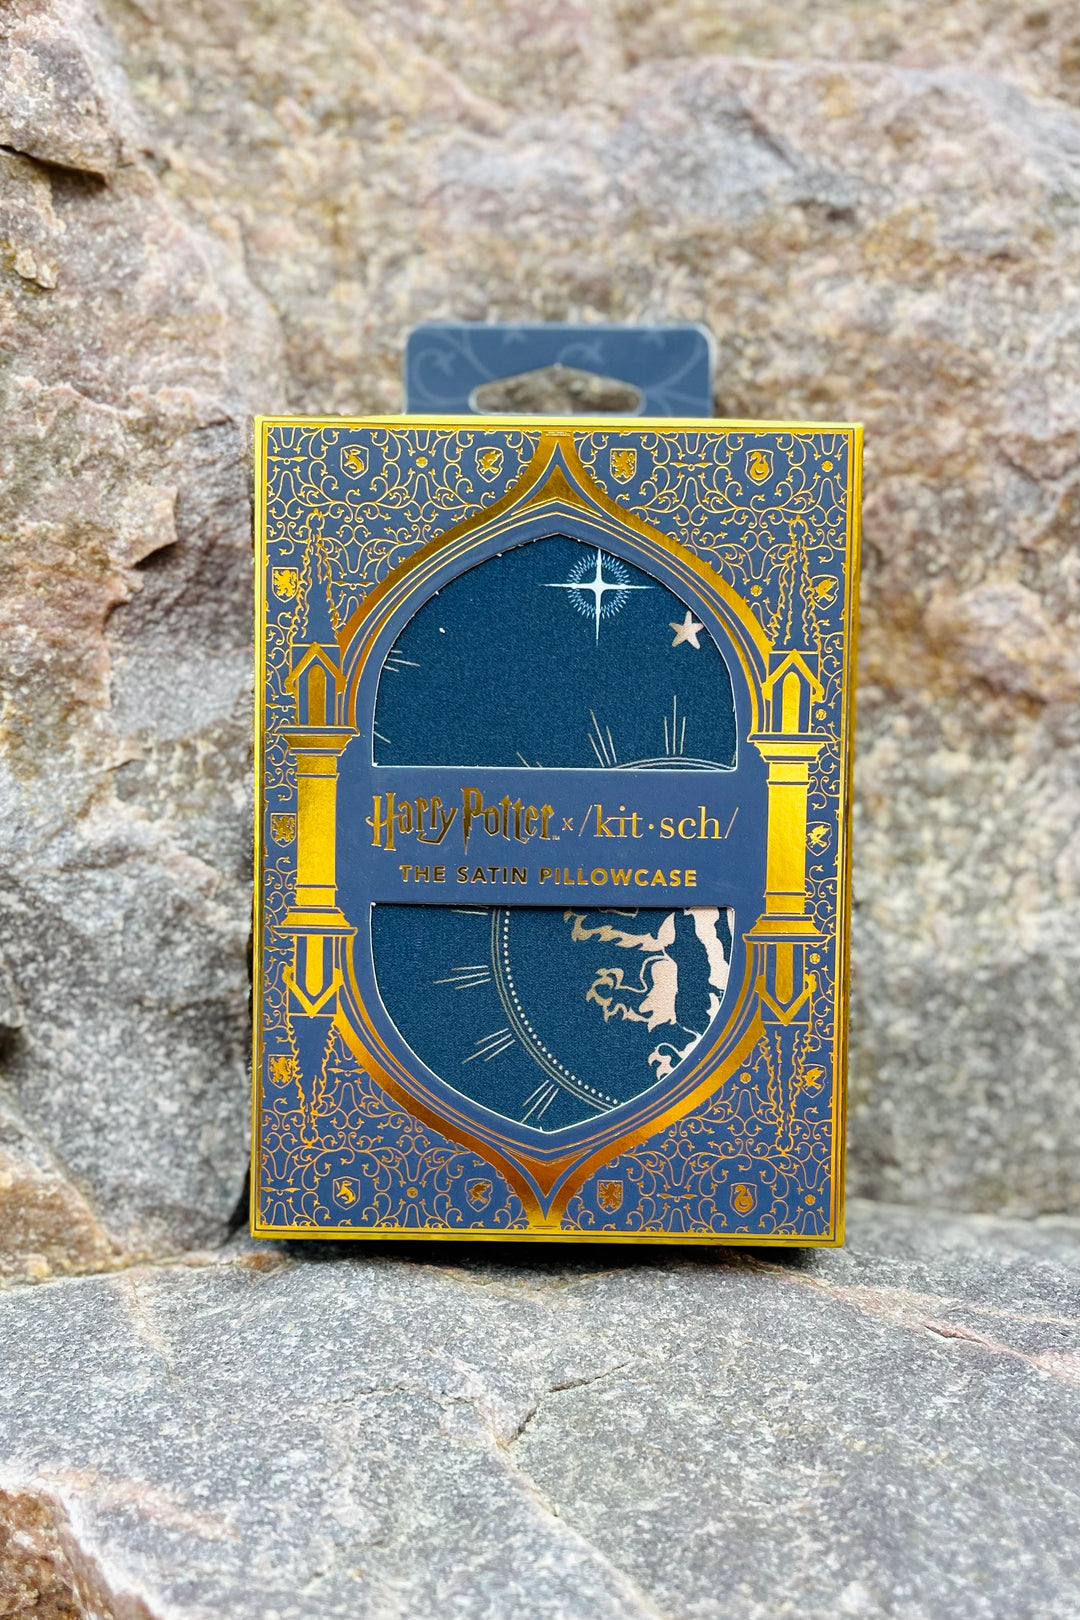 Harry Potter x Kitsch Satin Pillowcase--Midnight at Hogwarts